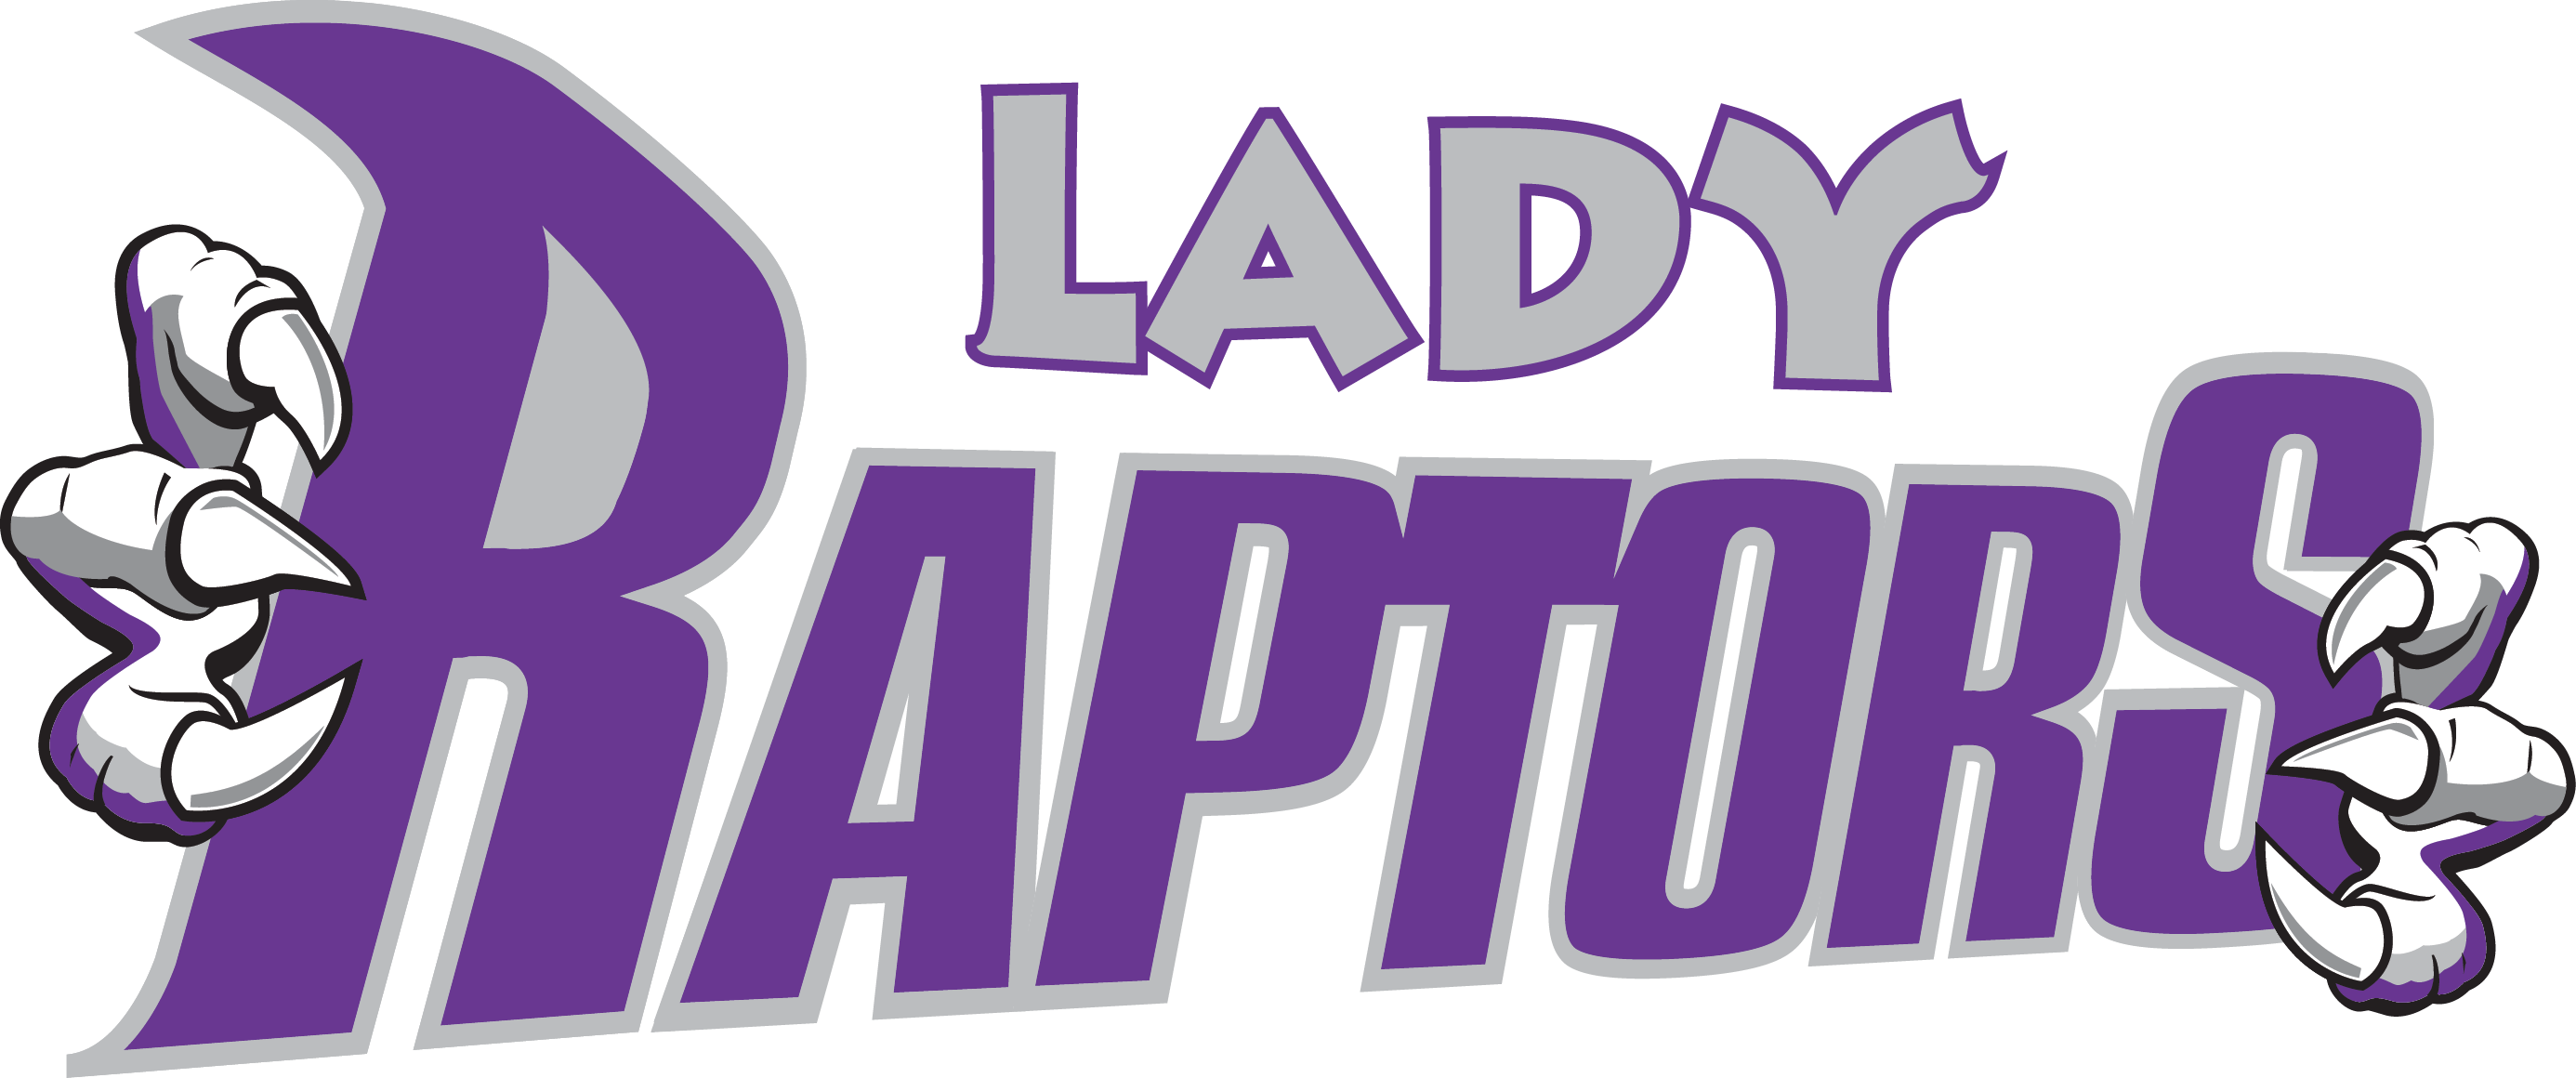 Toronto Basketball Purple Text Logo Raptors PNG Image